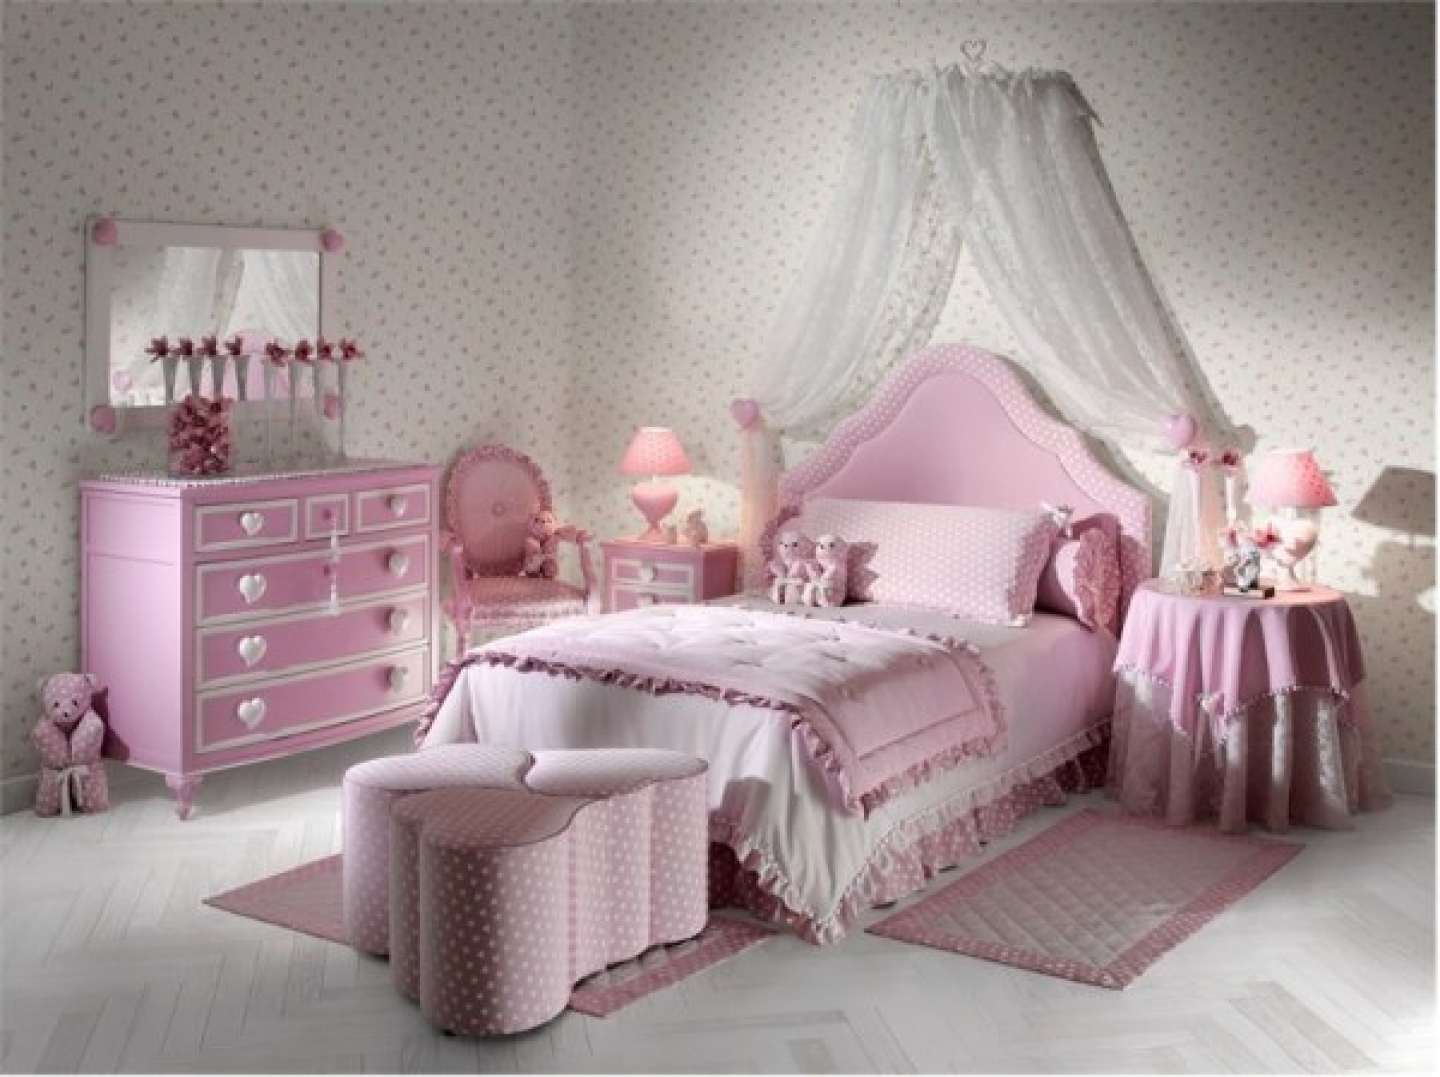 Princess Theme Bedroom Decorating Ideas